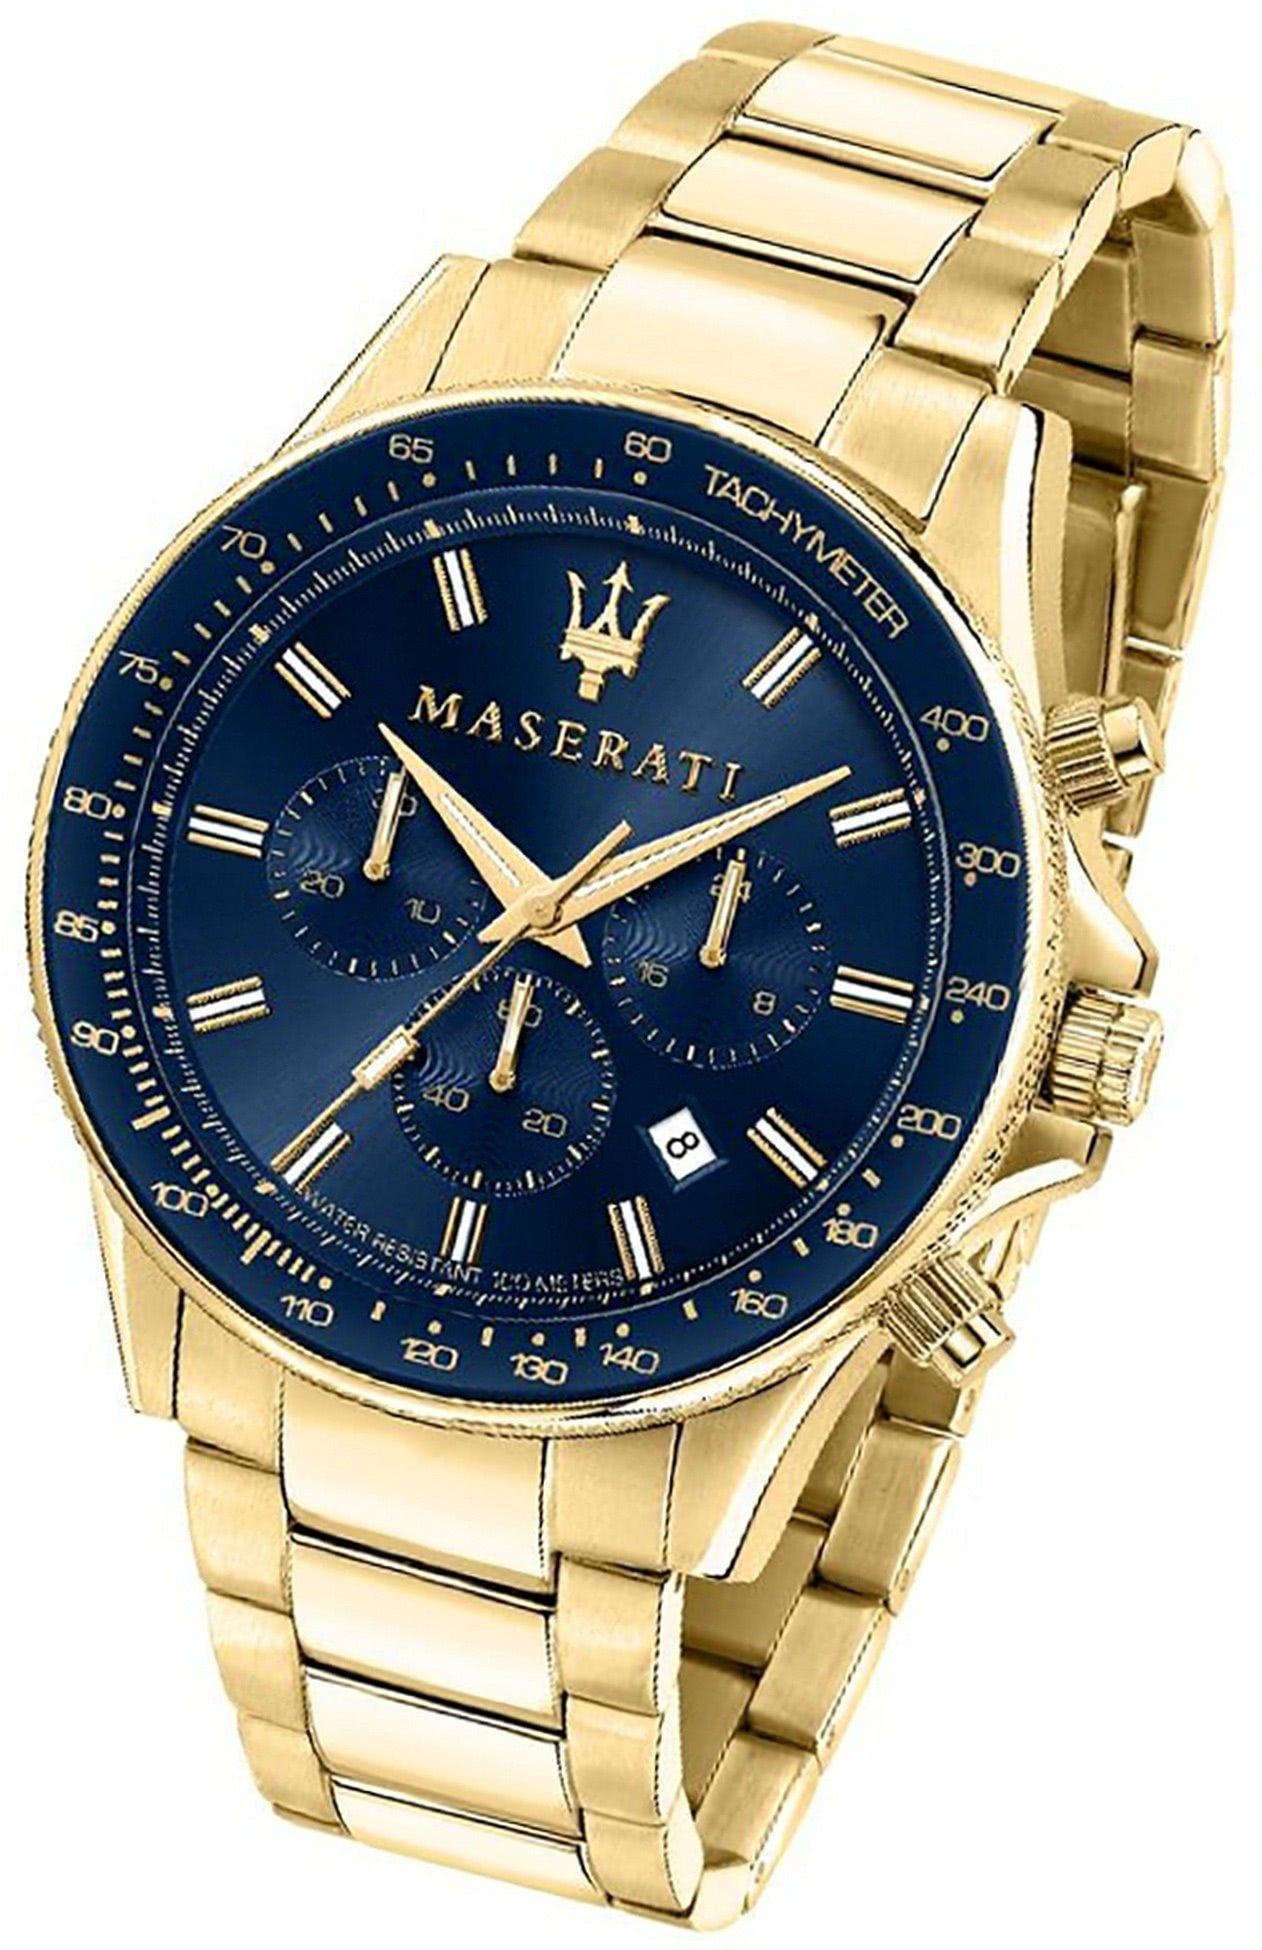 MASERATI Chronograph Maserati Edelstahl Armband-Uhr, Herrenuhr Edelstahlarmband, rundes Gehäuse, groß (ca. 44mm) blau